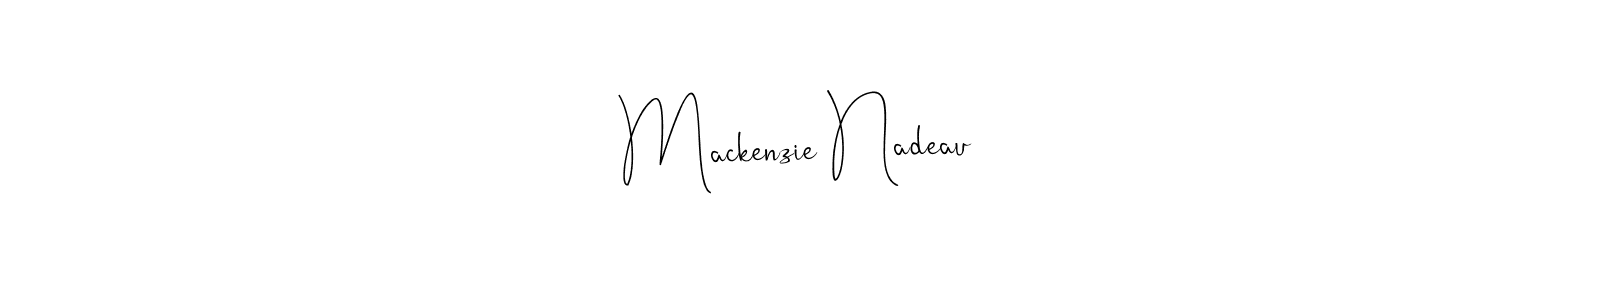 73+ Mackenzie Nadeau Name Signature Style Ideas | Great Online Autograph